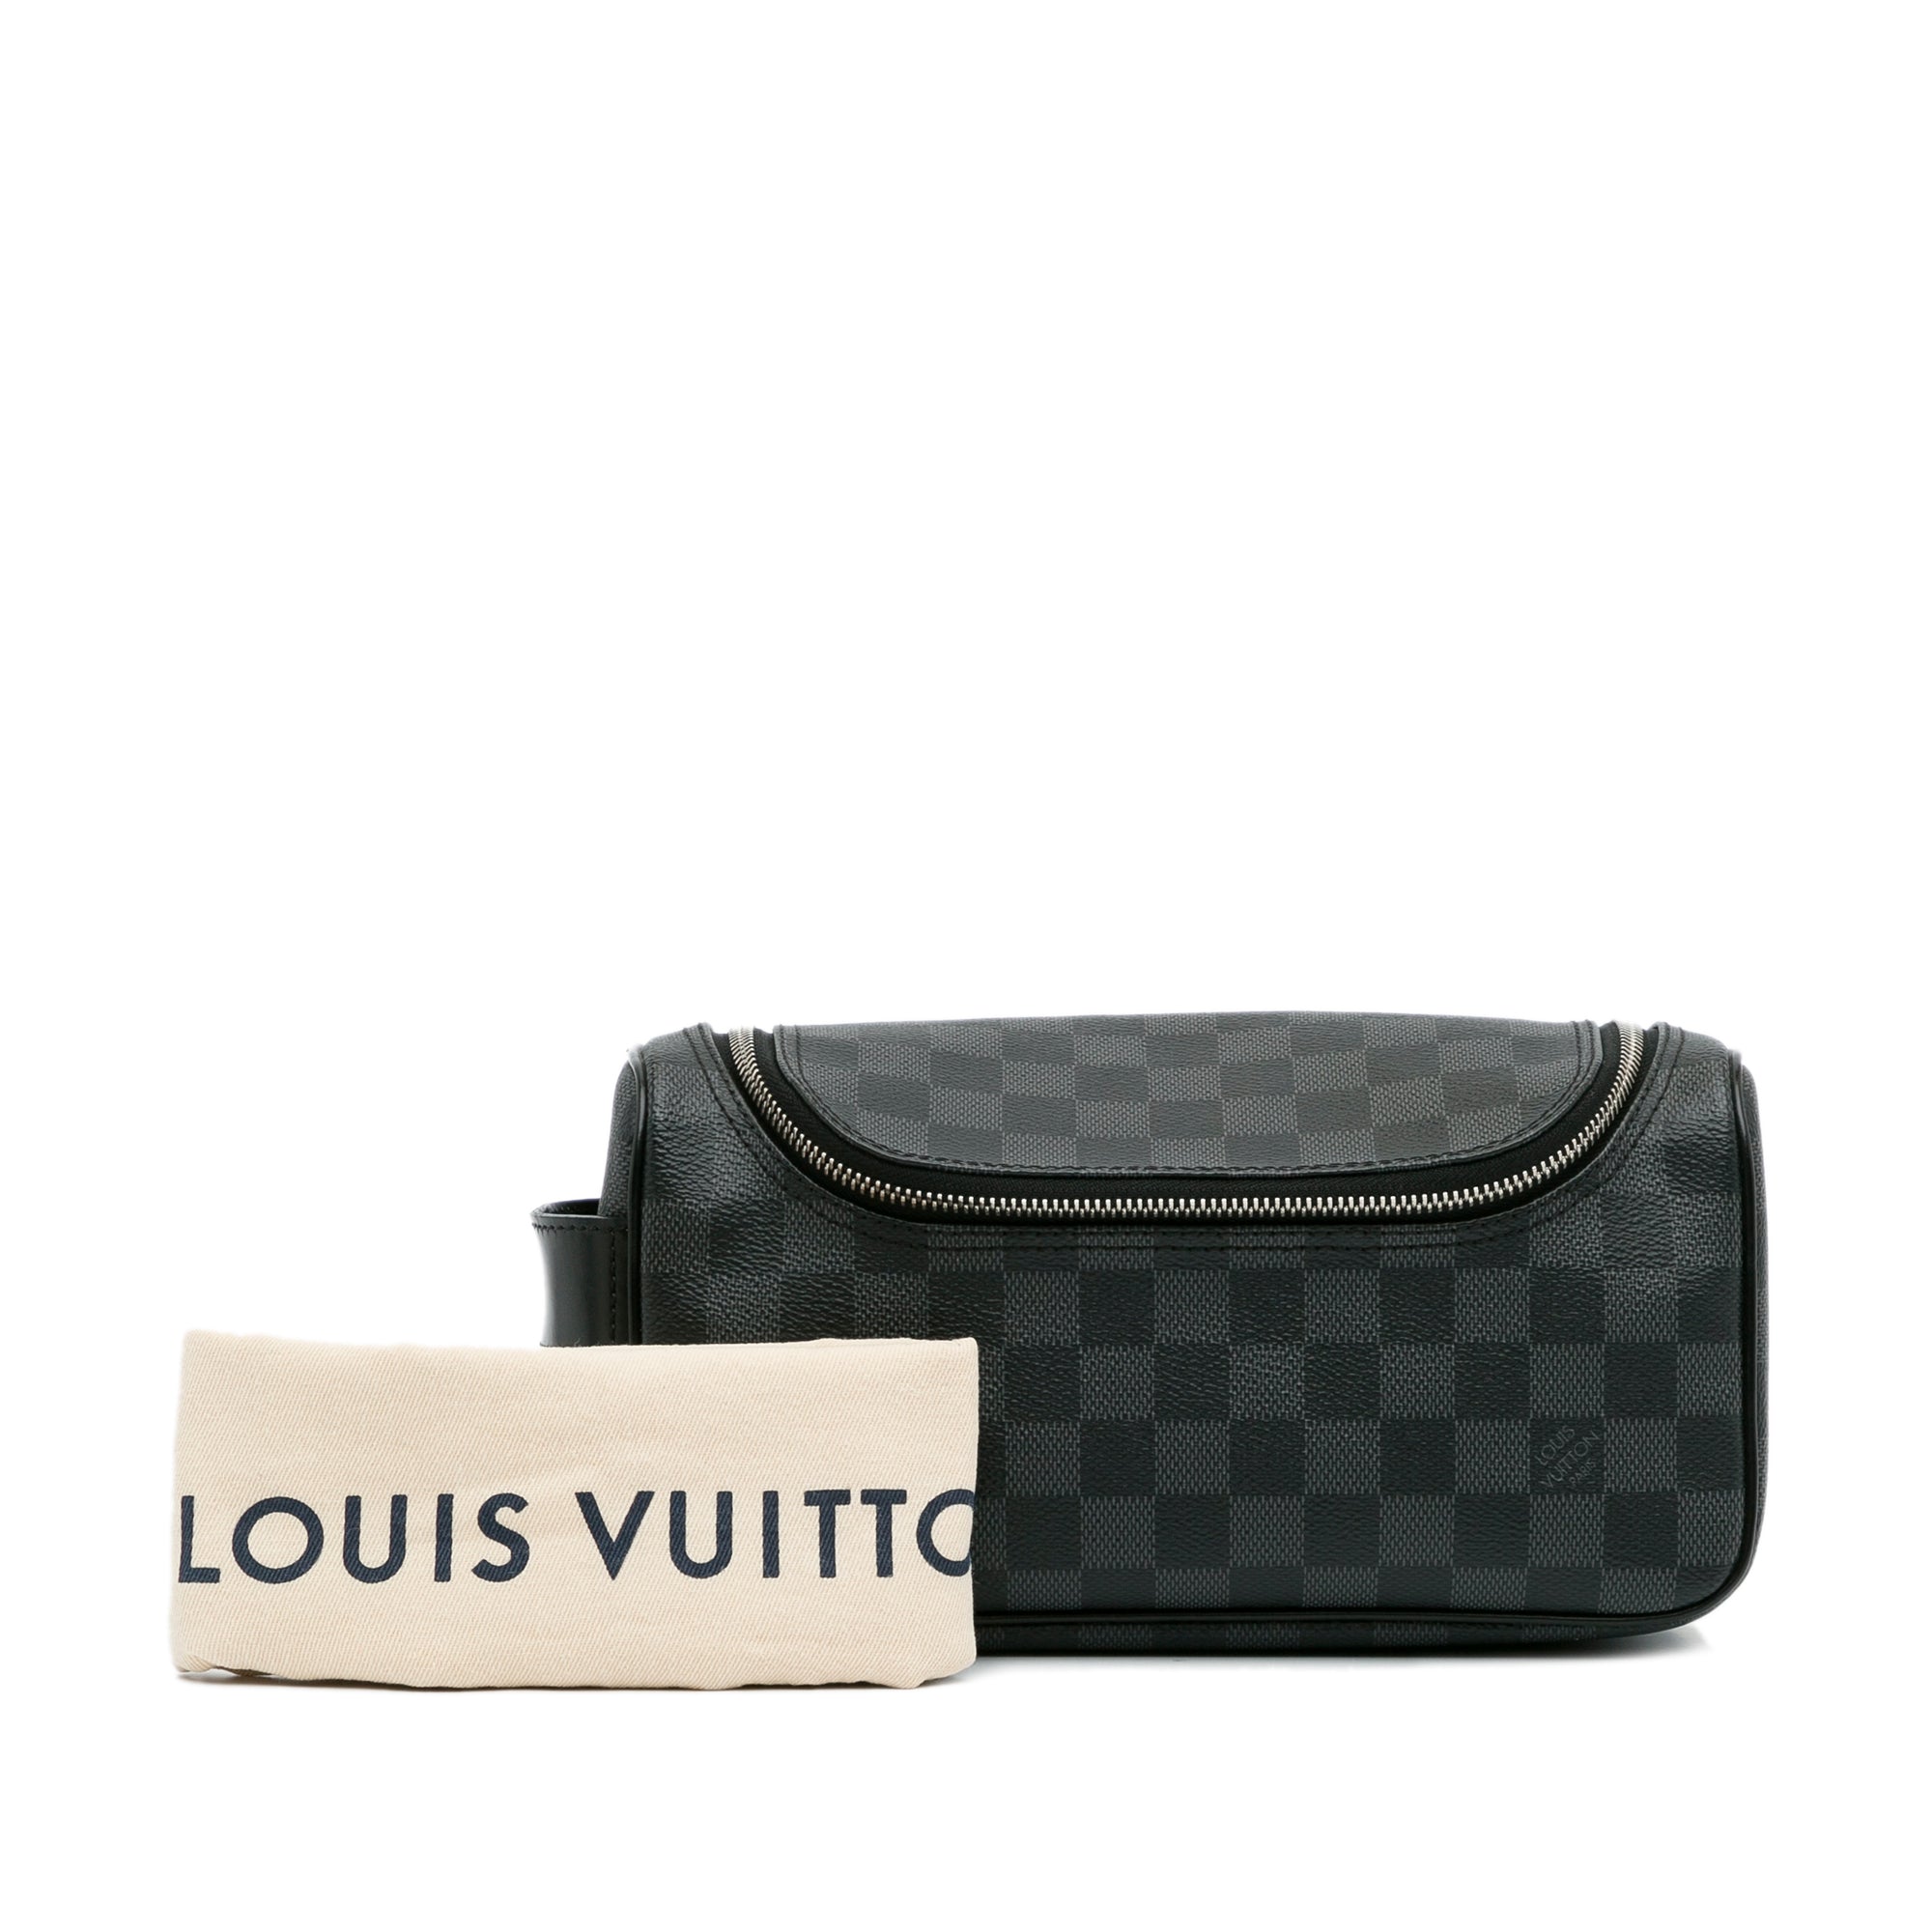 Louis Vuitton Black Damier Graphite Toiletry Pouch Make Up Pouch 862014